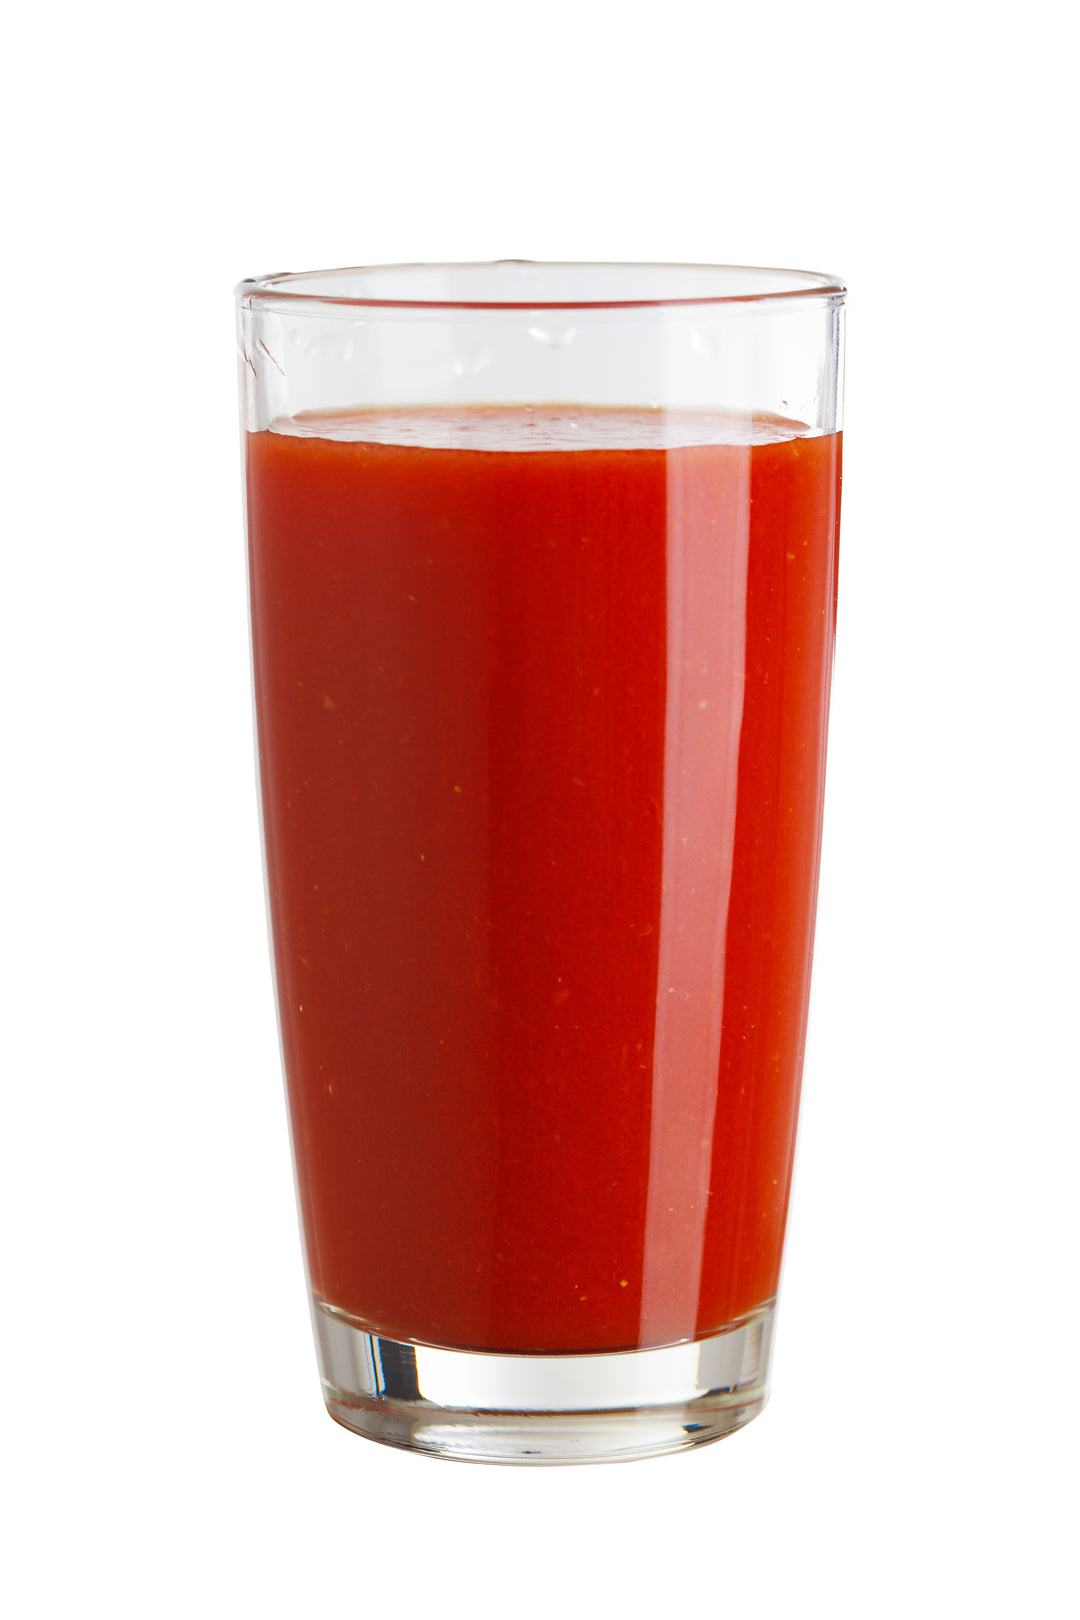 Ruby Kist Tomato Juice-64 fl oz.s-8/Case